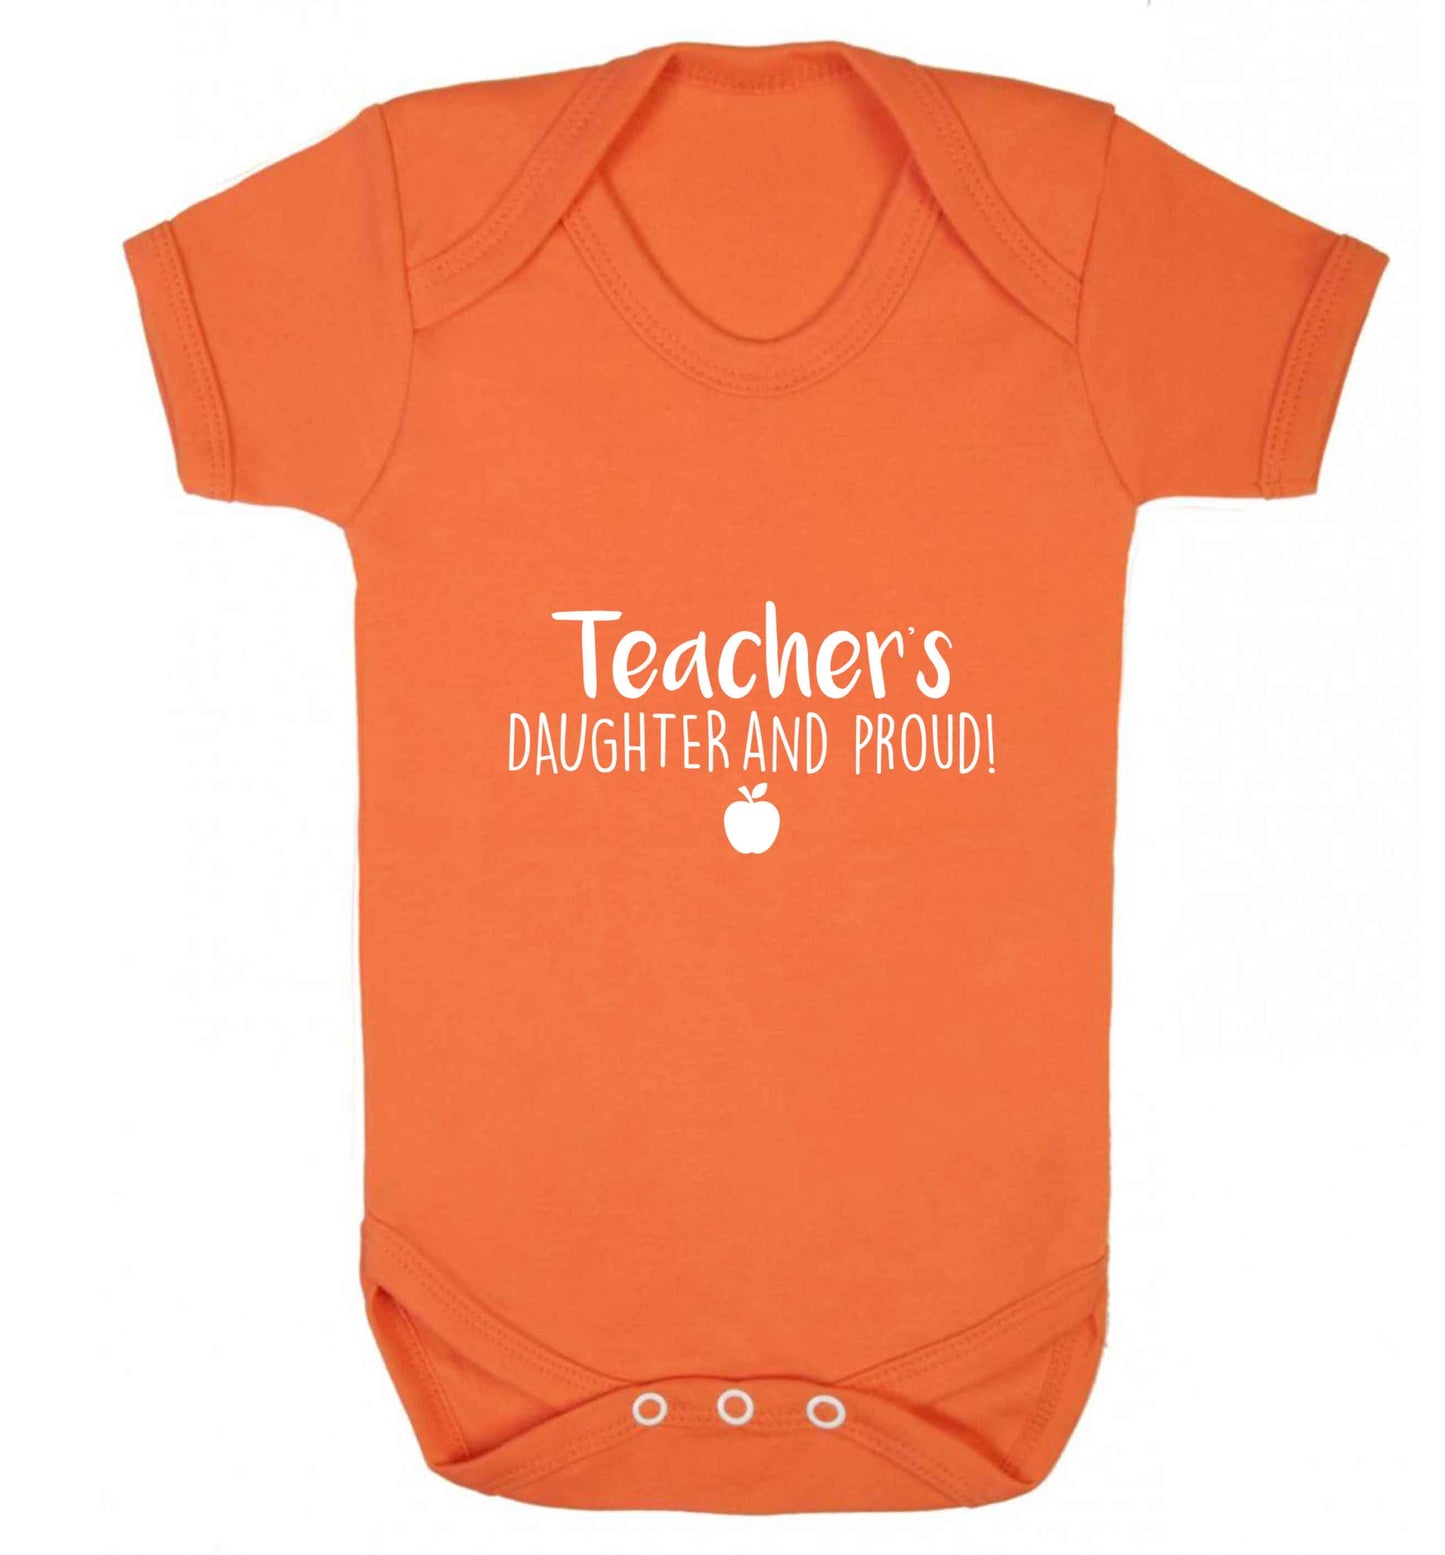 Teachers daughter and proud baby vest orange 18-24 months